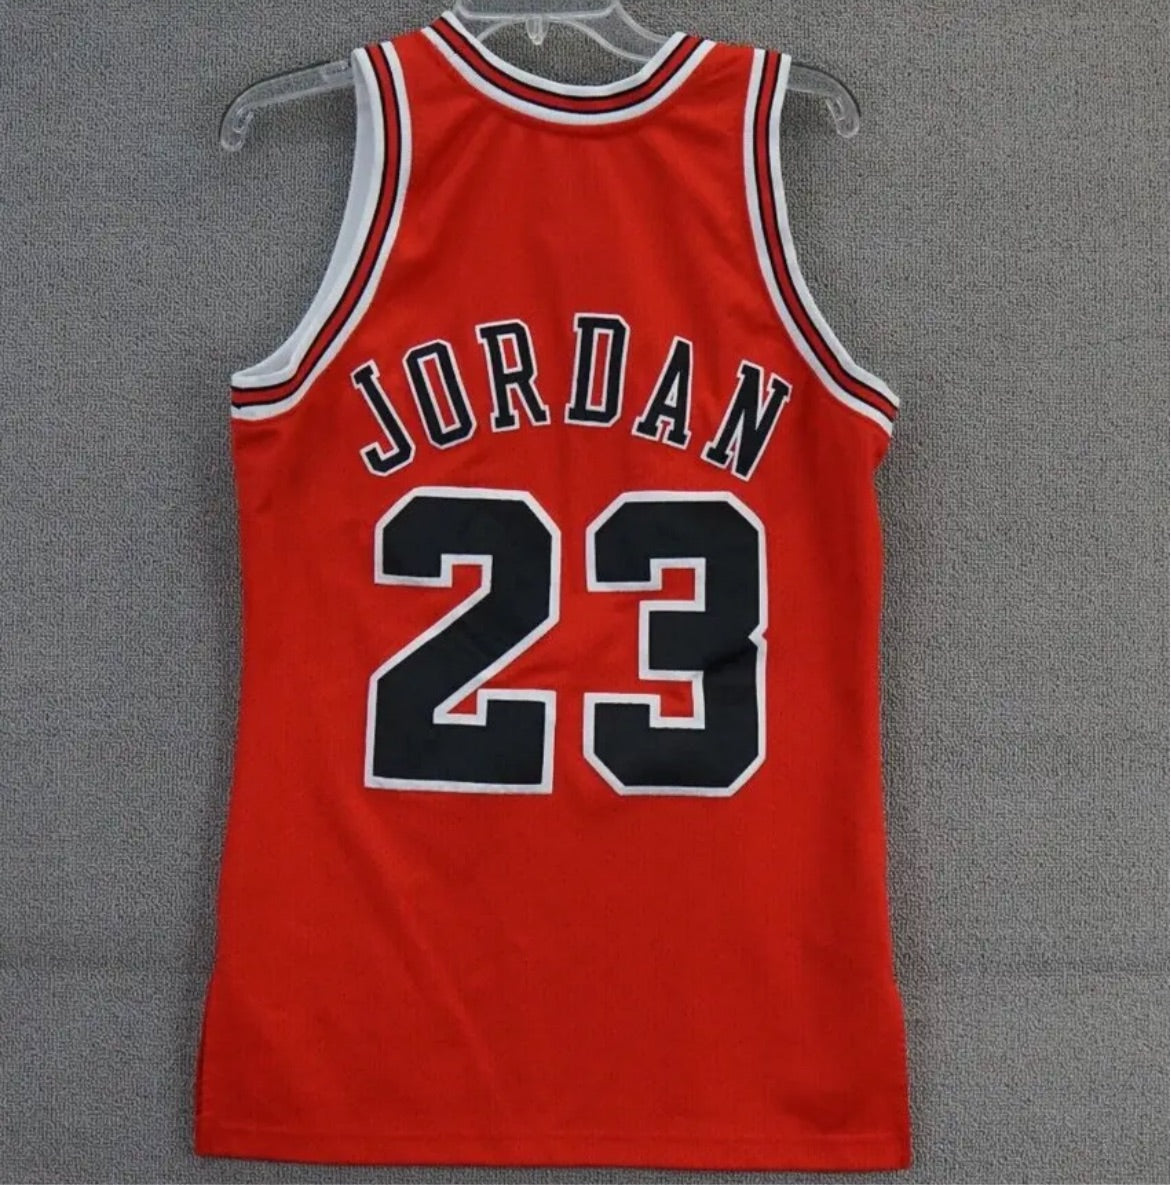 Mitchell & Ness Michael Jordan Chicago Bulls Green Throwback Hardwood Classics 97-98 Swingman Jersey